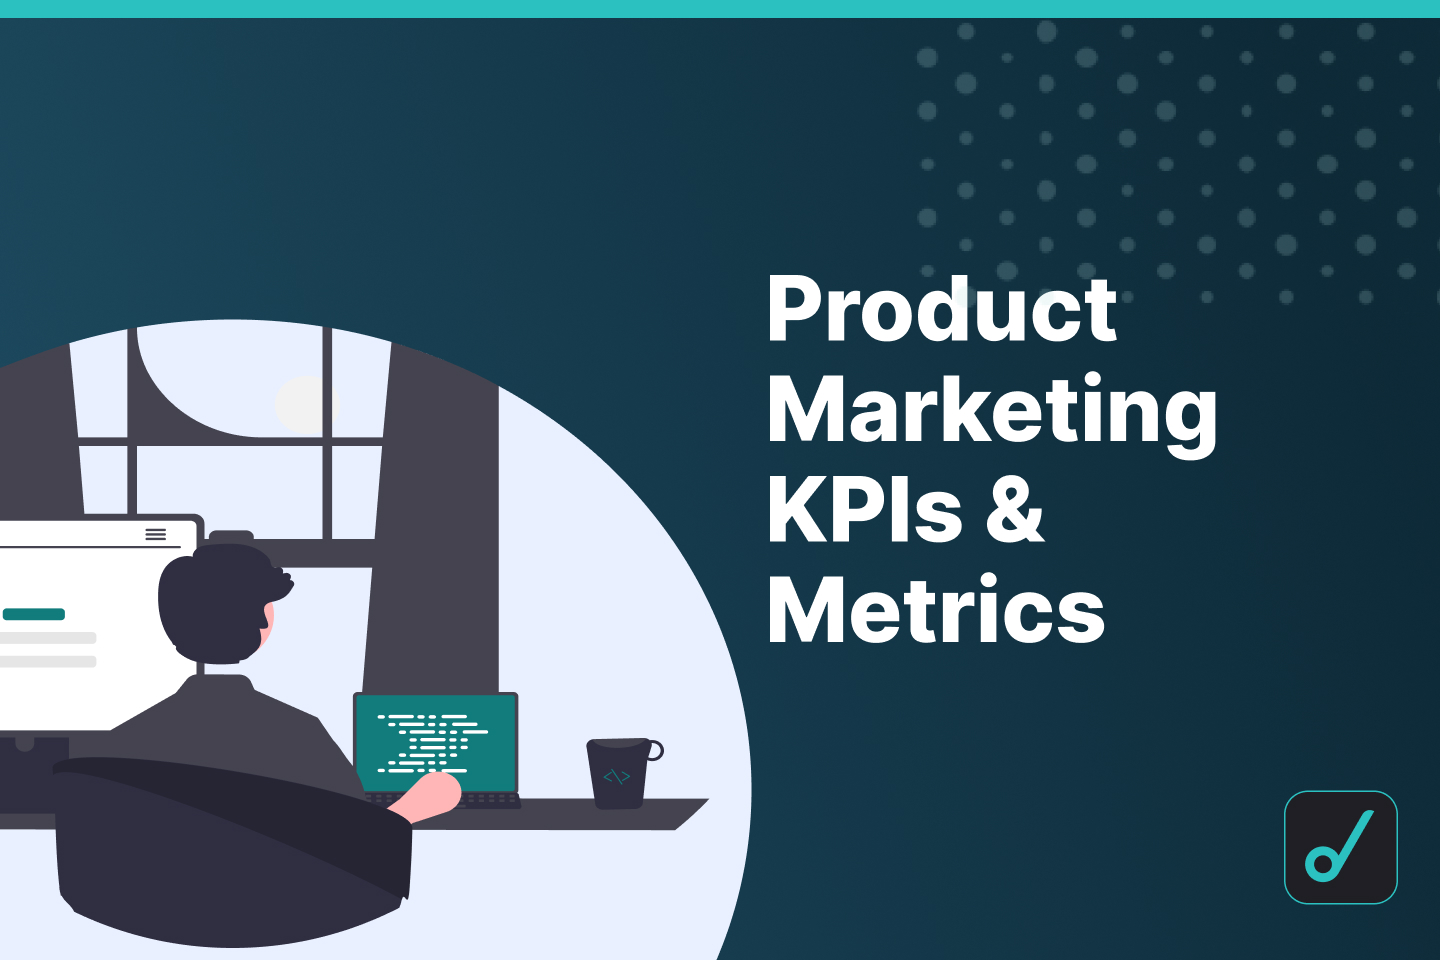 Product Marketing KPIs & Metrics